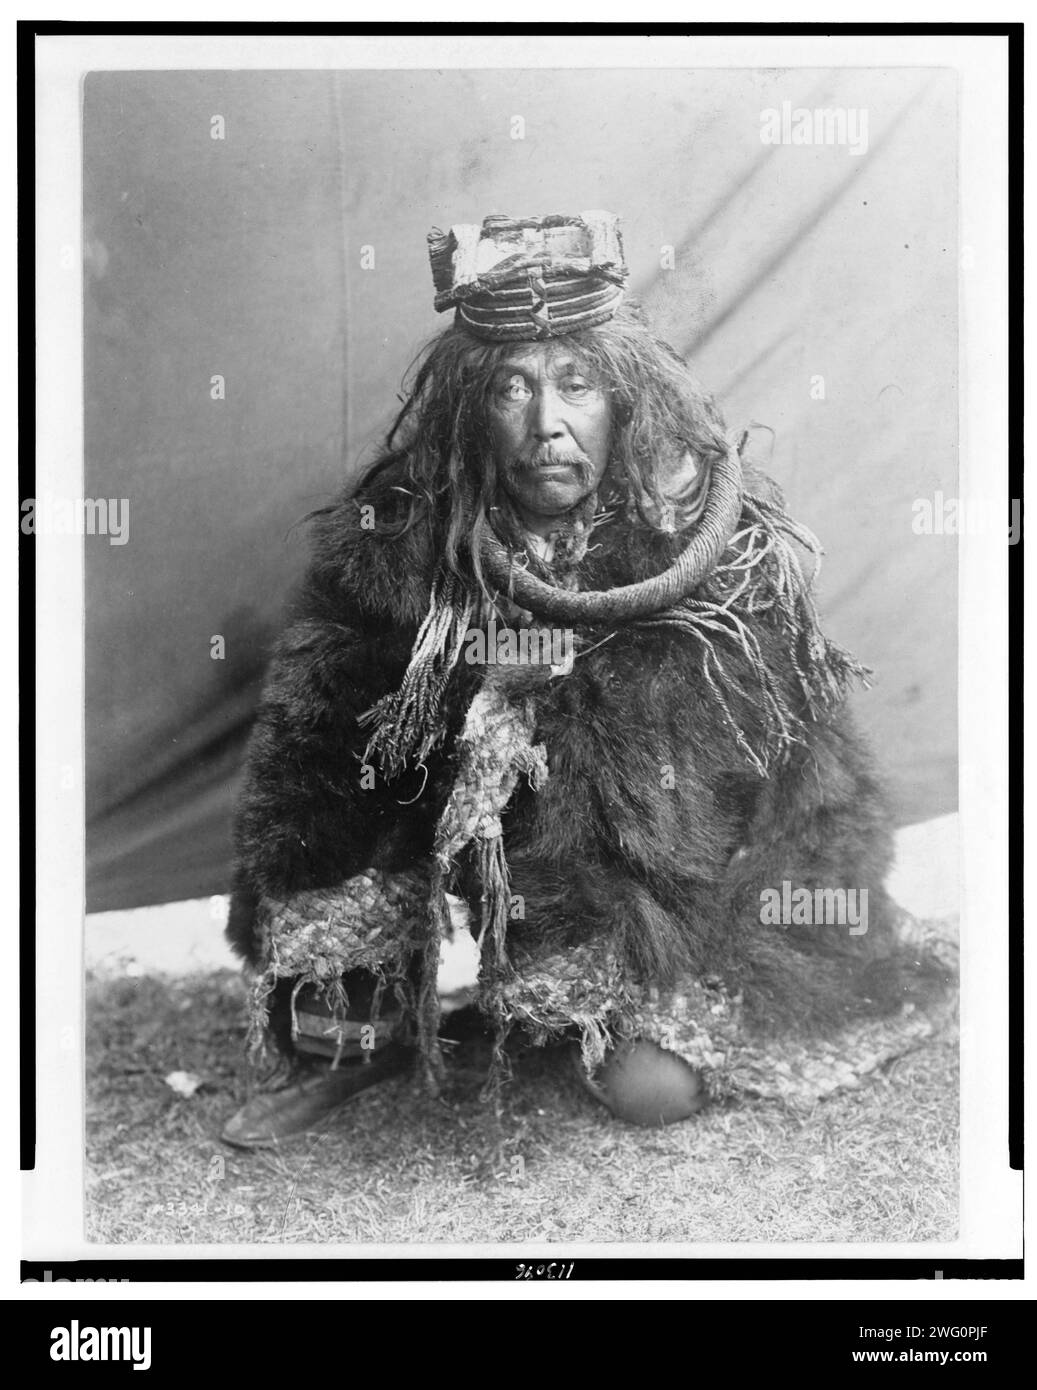 A Hamatsa costume-Nakoaktok, c1910. Kwakiutl man kneeling on one knee dressed in skins, hat and other garments. Stock Photo